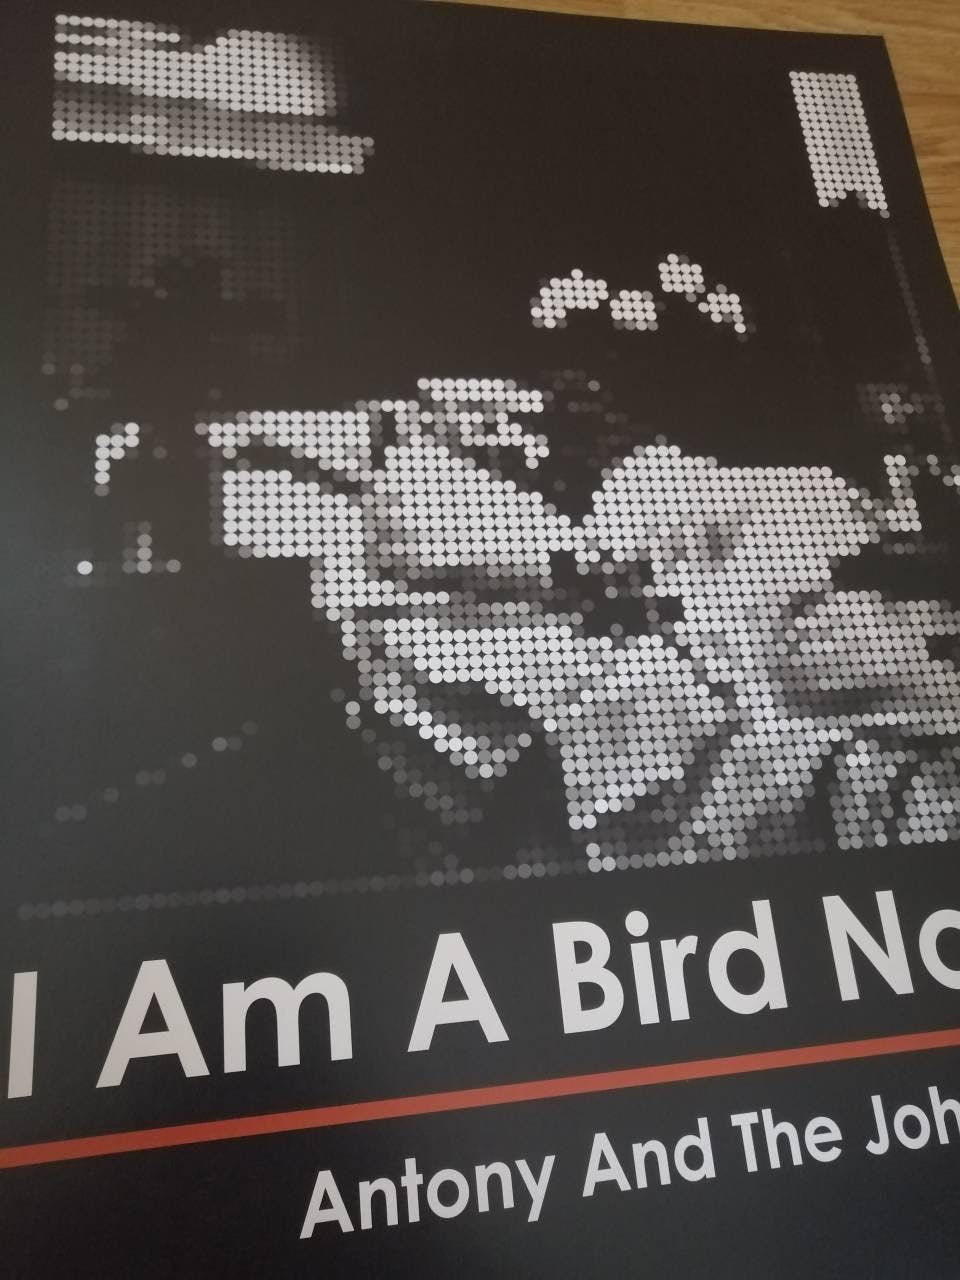 Retro-style art print of I Am a Bird Now